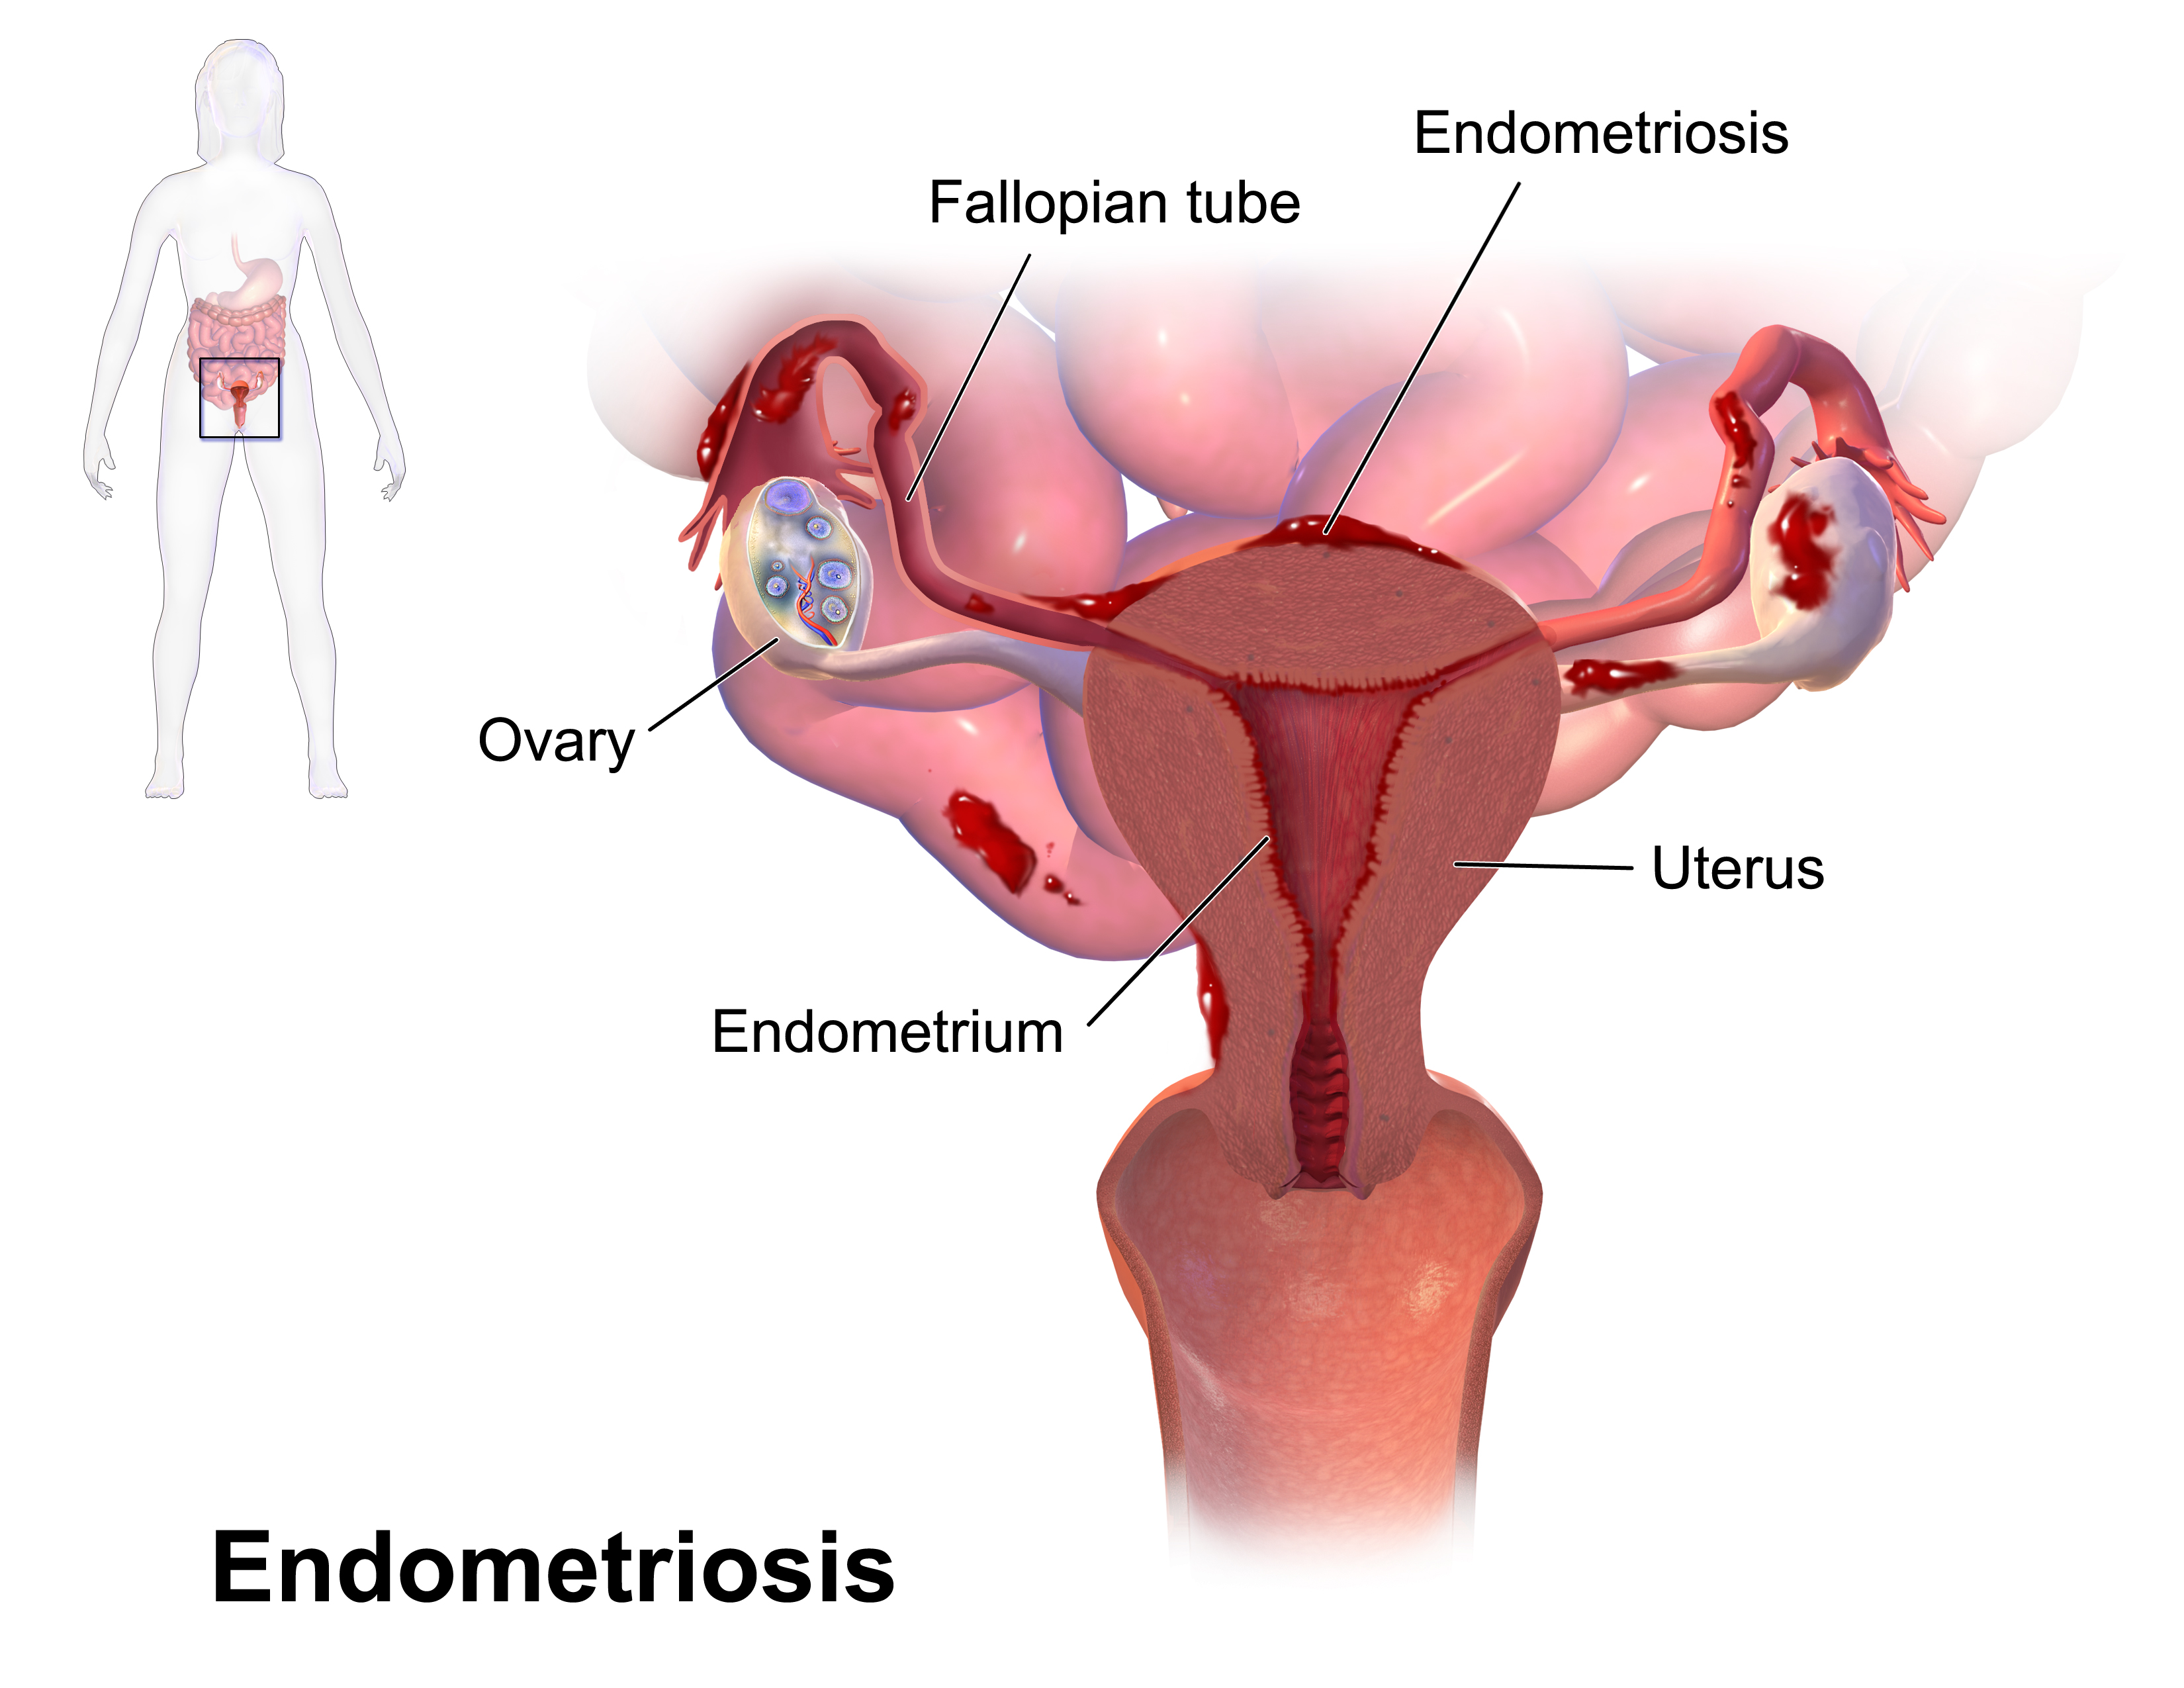 https://upload.wikimedia.org/wikipedia/commons/d/d5/Blausen_0349_Endometriosis.png